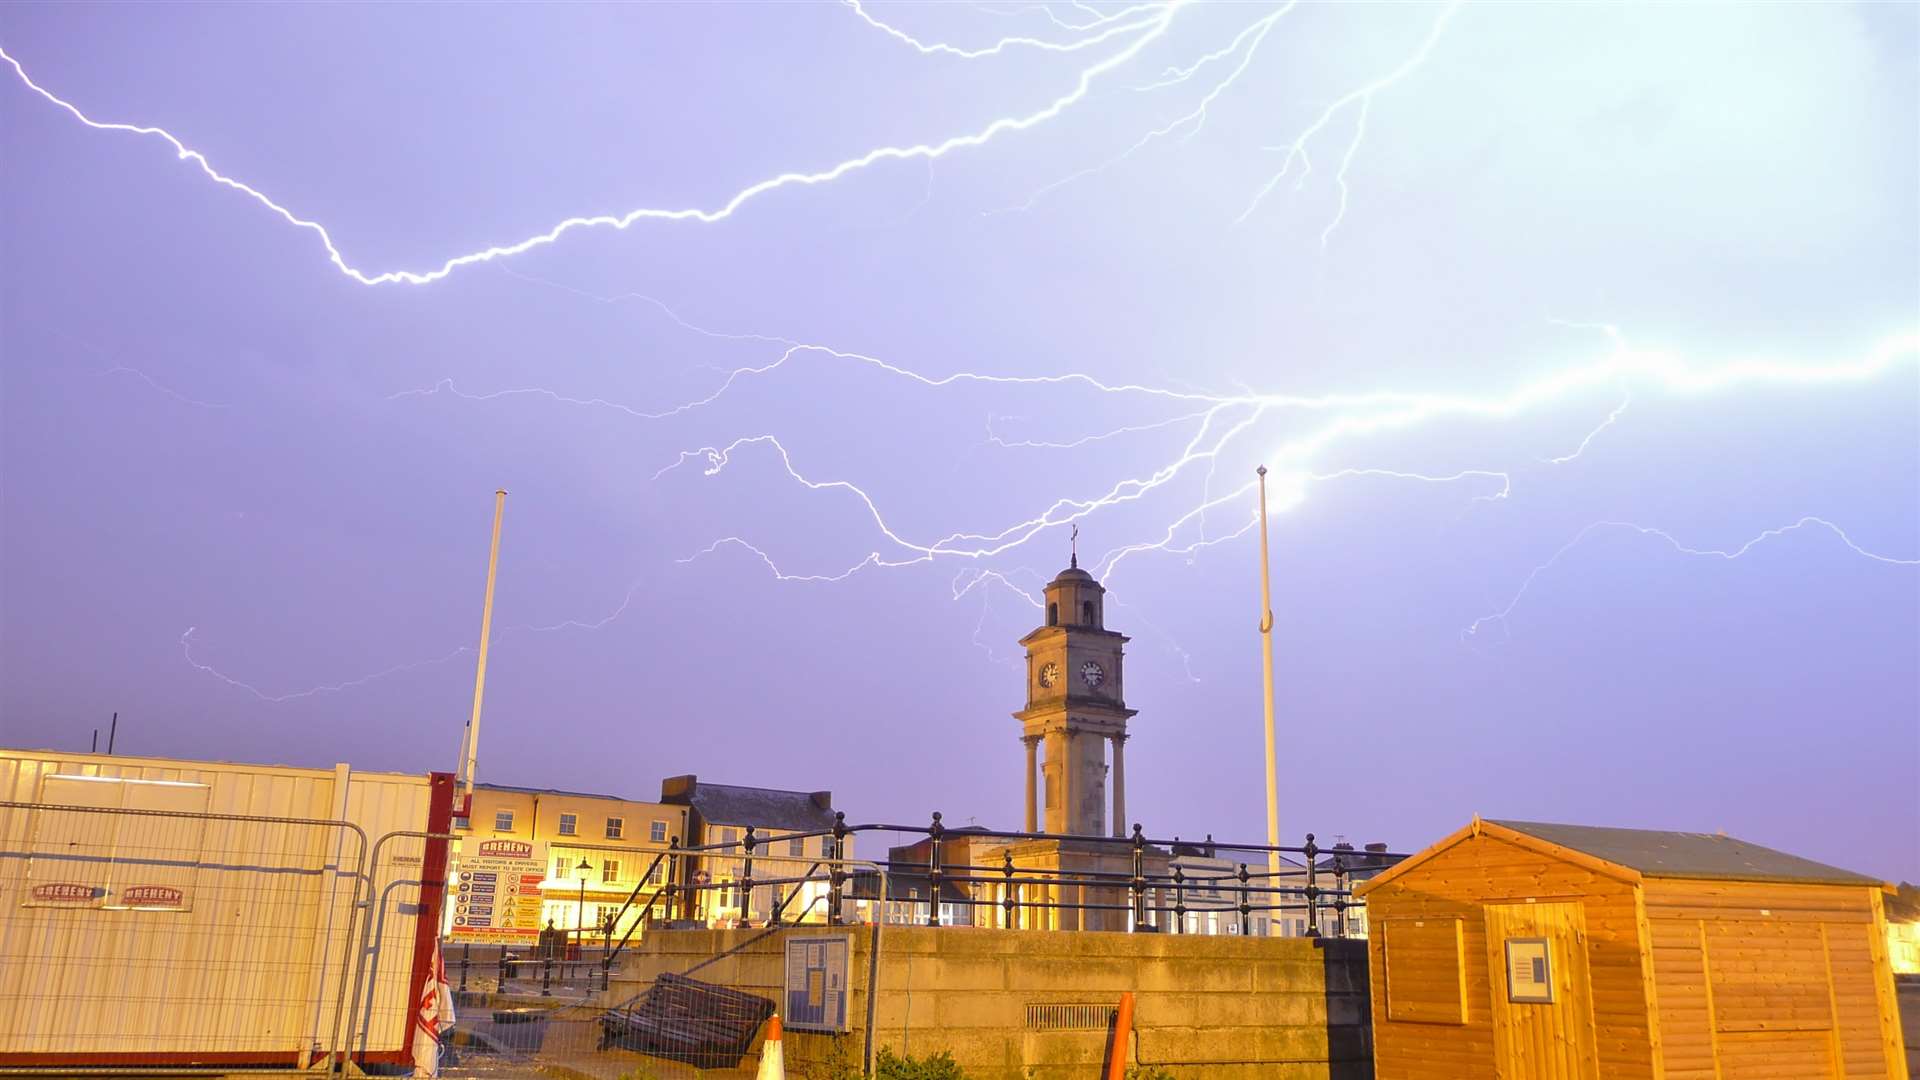 Lightning above Herne Bay clocktower, taken by Paul Darby